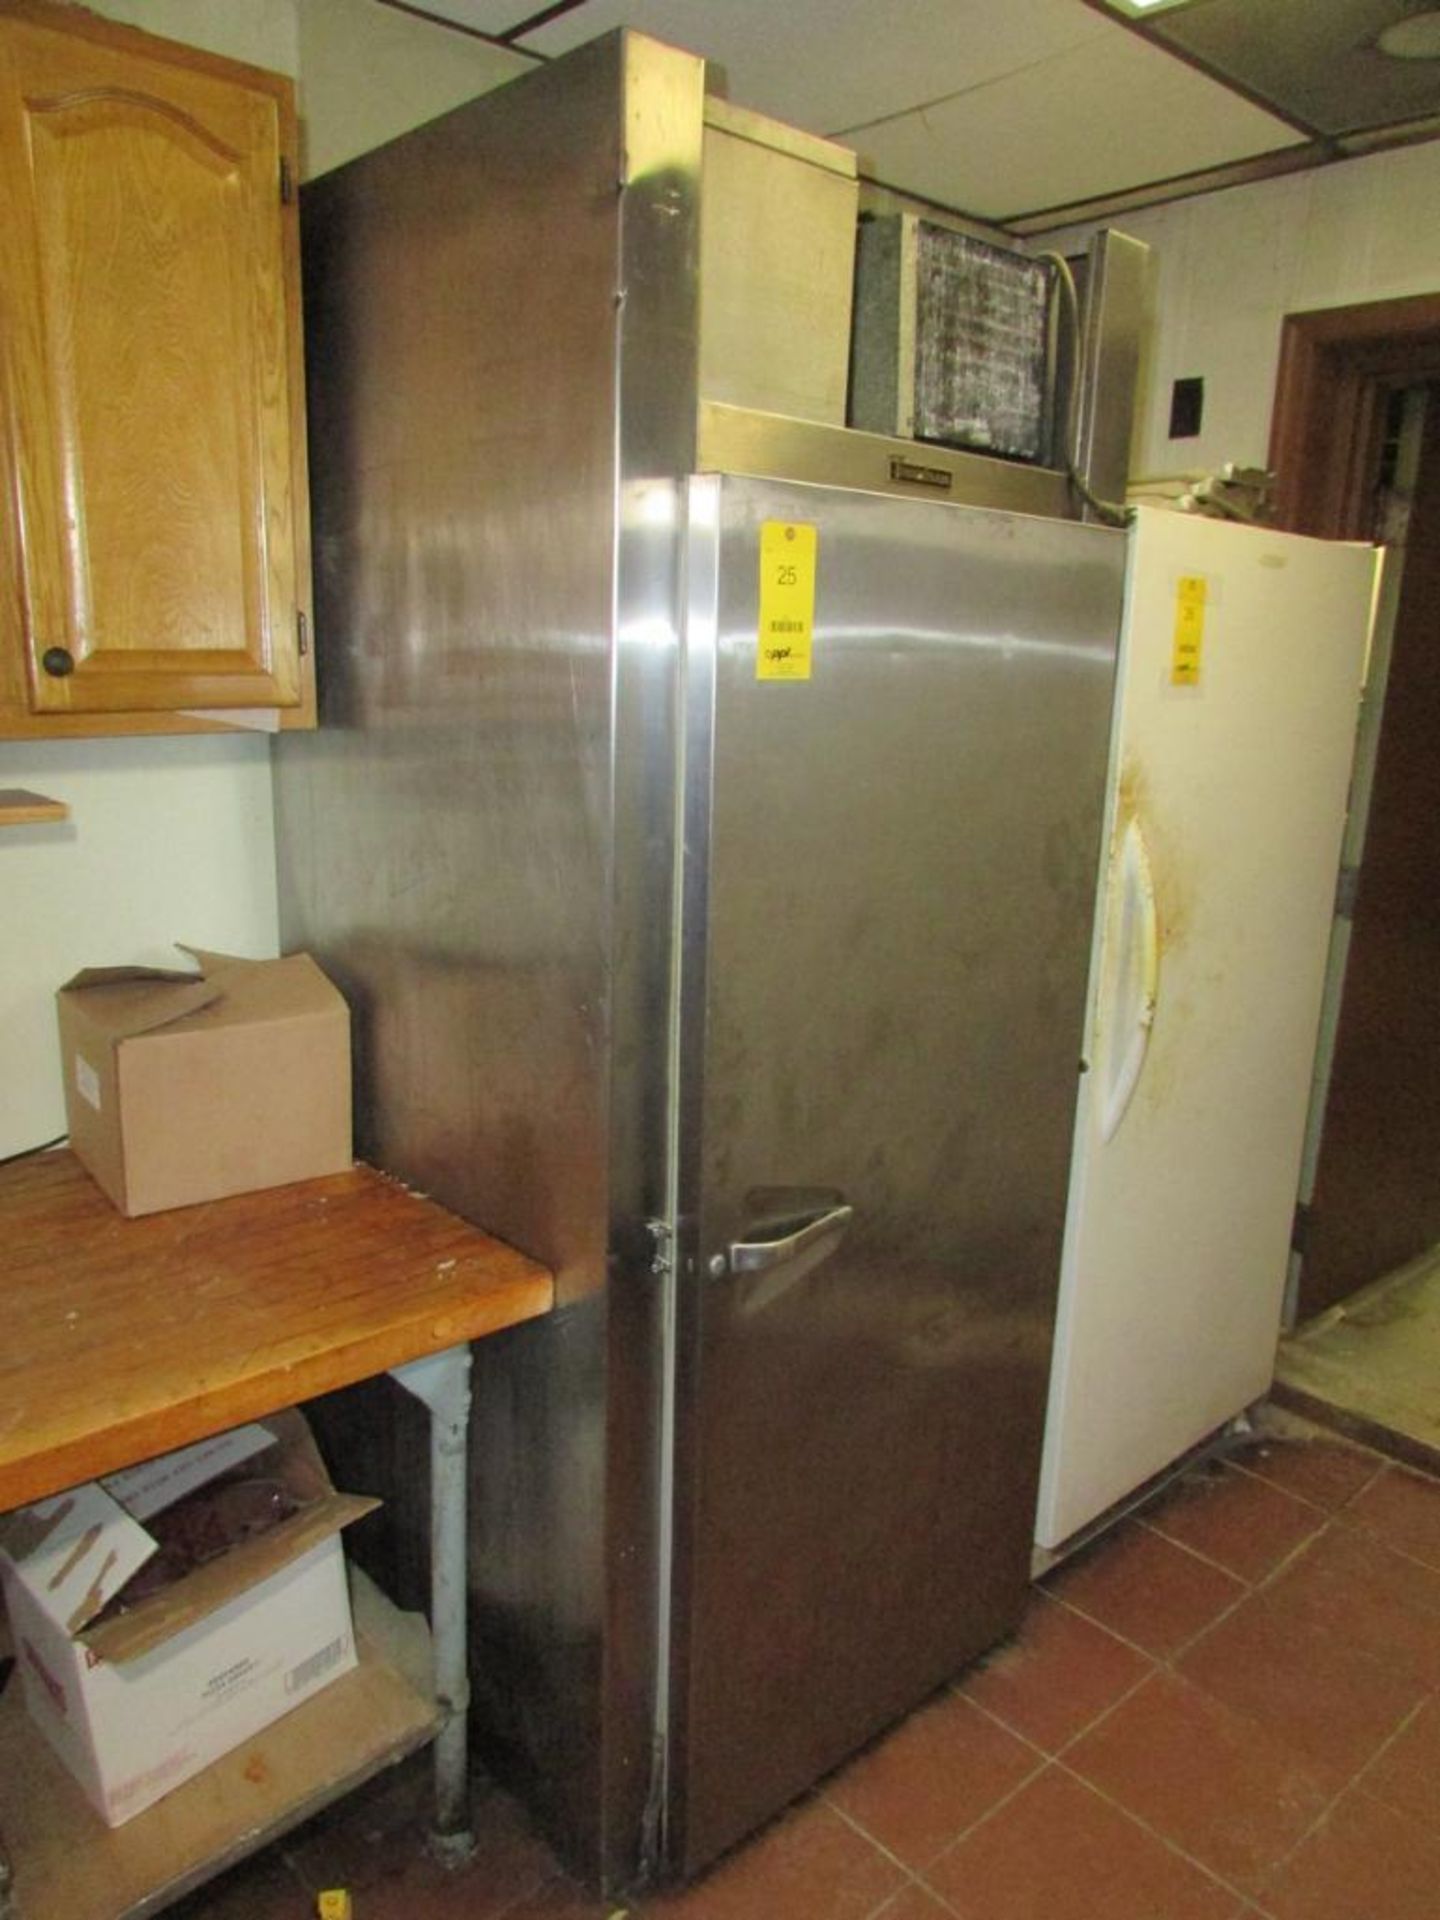 Traulsen & Co. ARI 1-32 LPUT Commercial Refrigerator. Approx. 30"x28"68" Chamber, 115V 60Hz 1PH. S/N